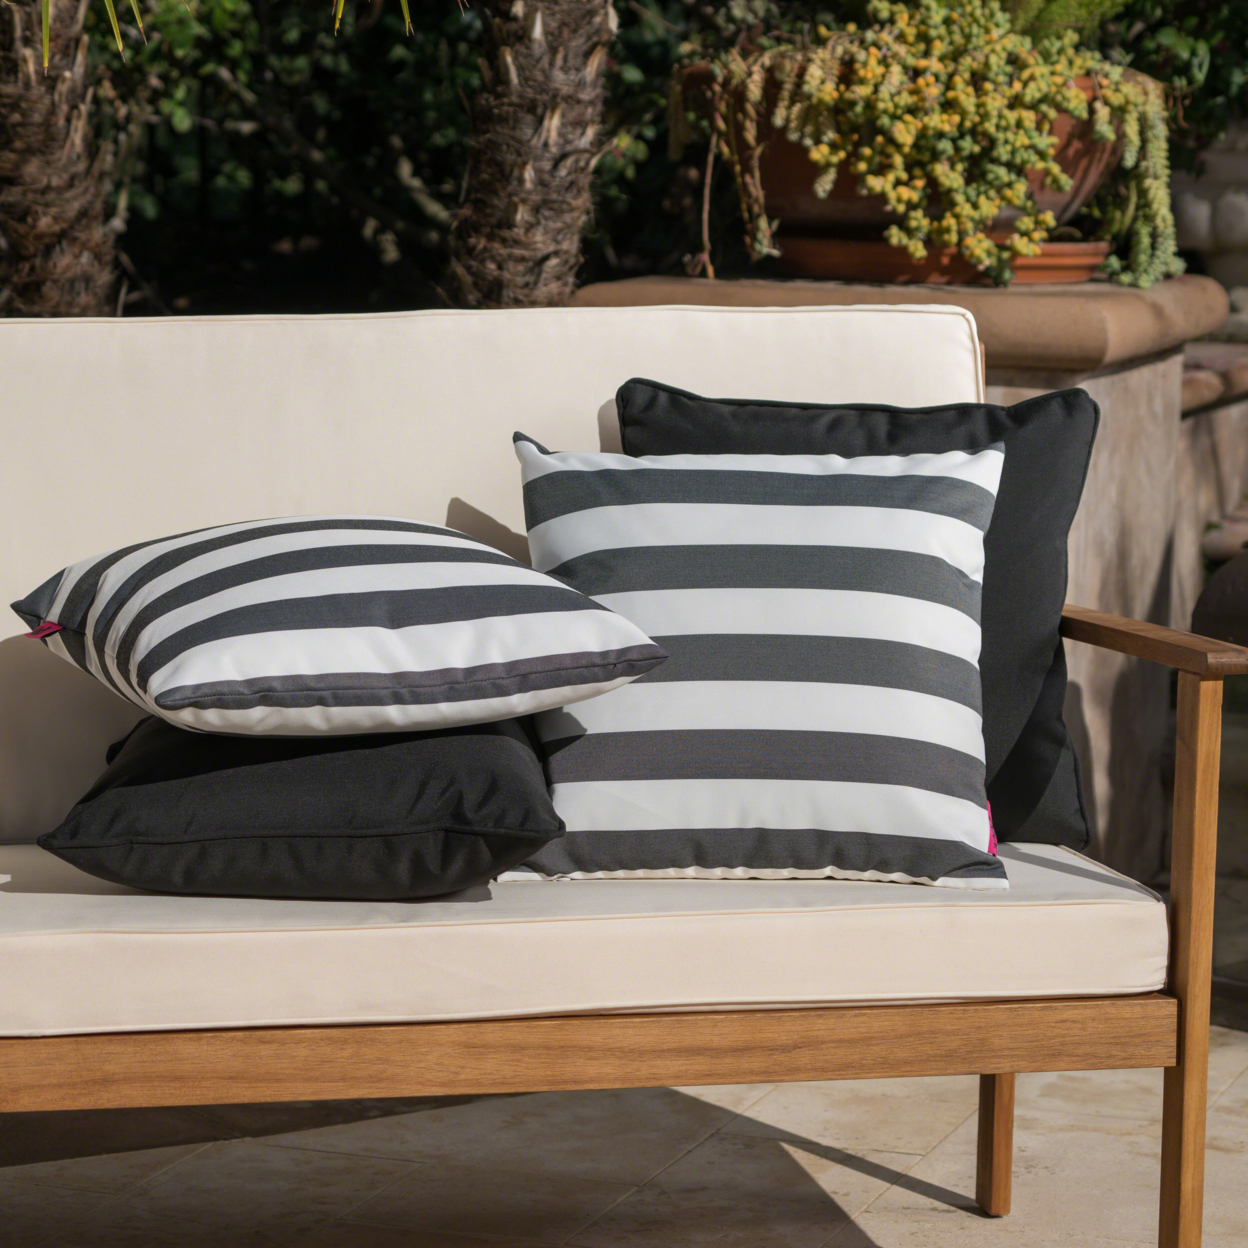 La Jolla Outdoor Striped Water Resistant Square Throw Pillows - Set Of 4 - Black/White - Jailhouse